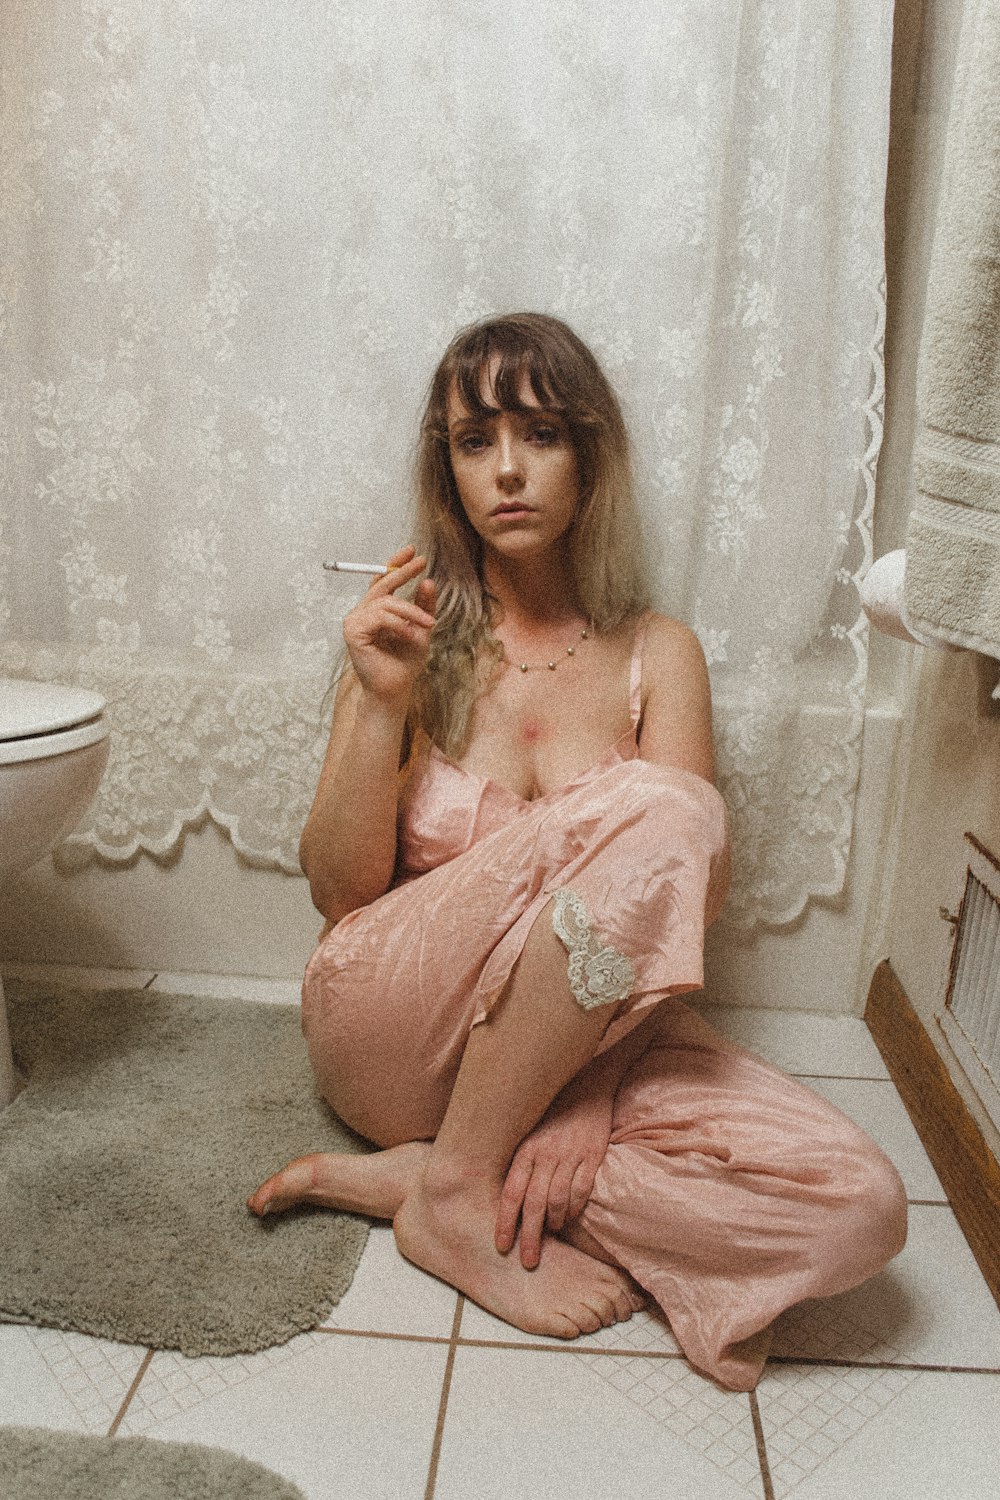 sitting woman wearing pajama pants smoking inside bathroom